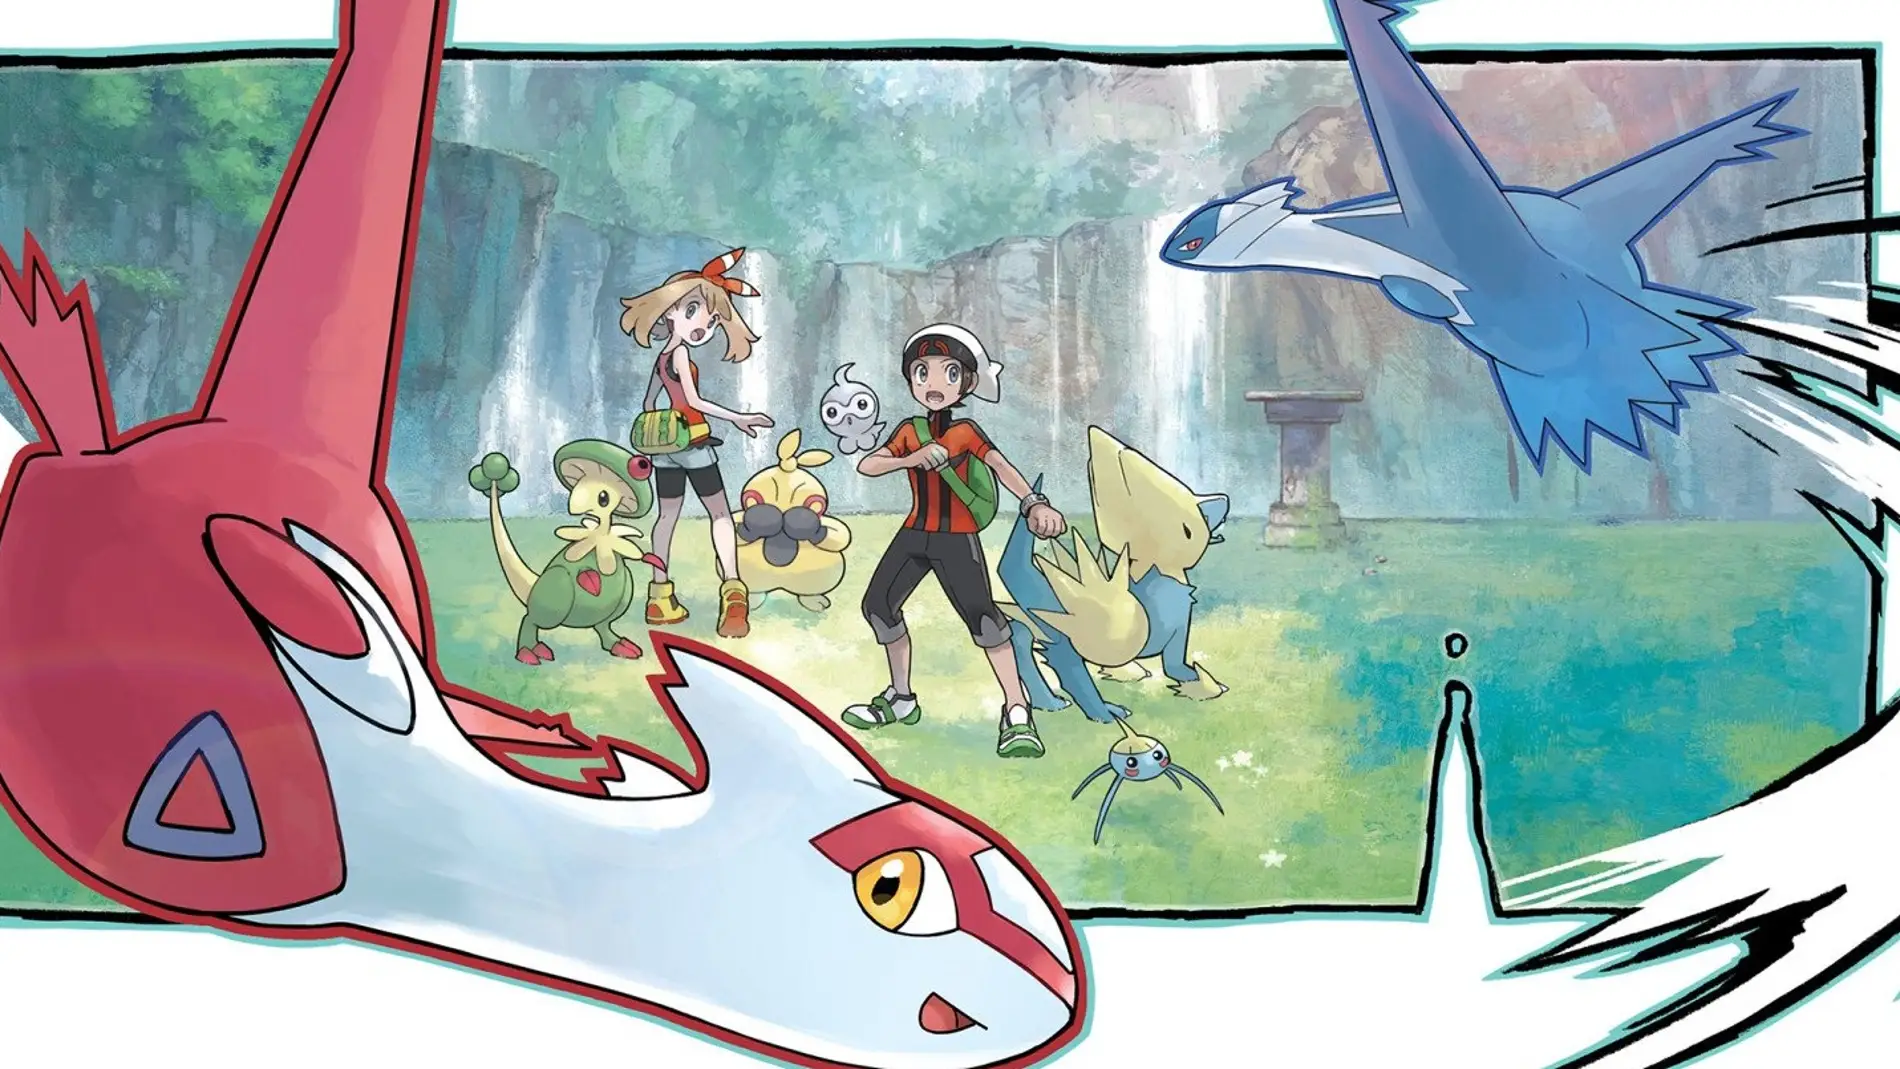 Pokémon Rubí Omega y Zafiro Alfa